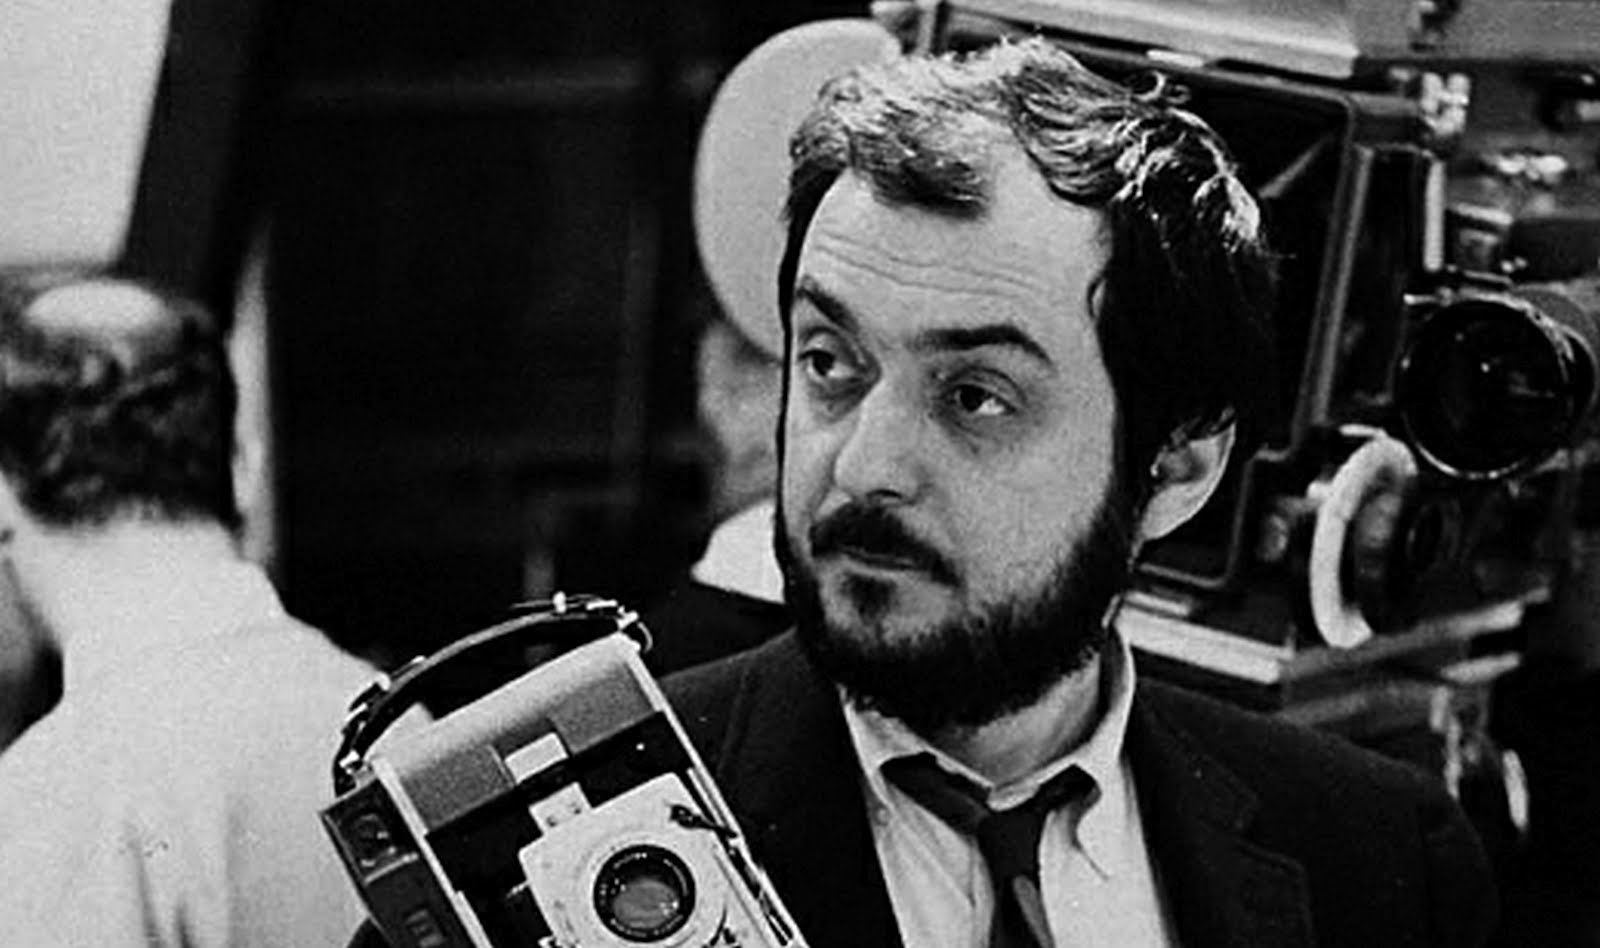 Theatro Municipal De São Paulo apresenta “Kubrick Em Concerto” com Laranja Mecânica